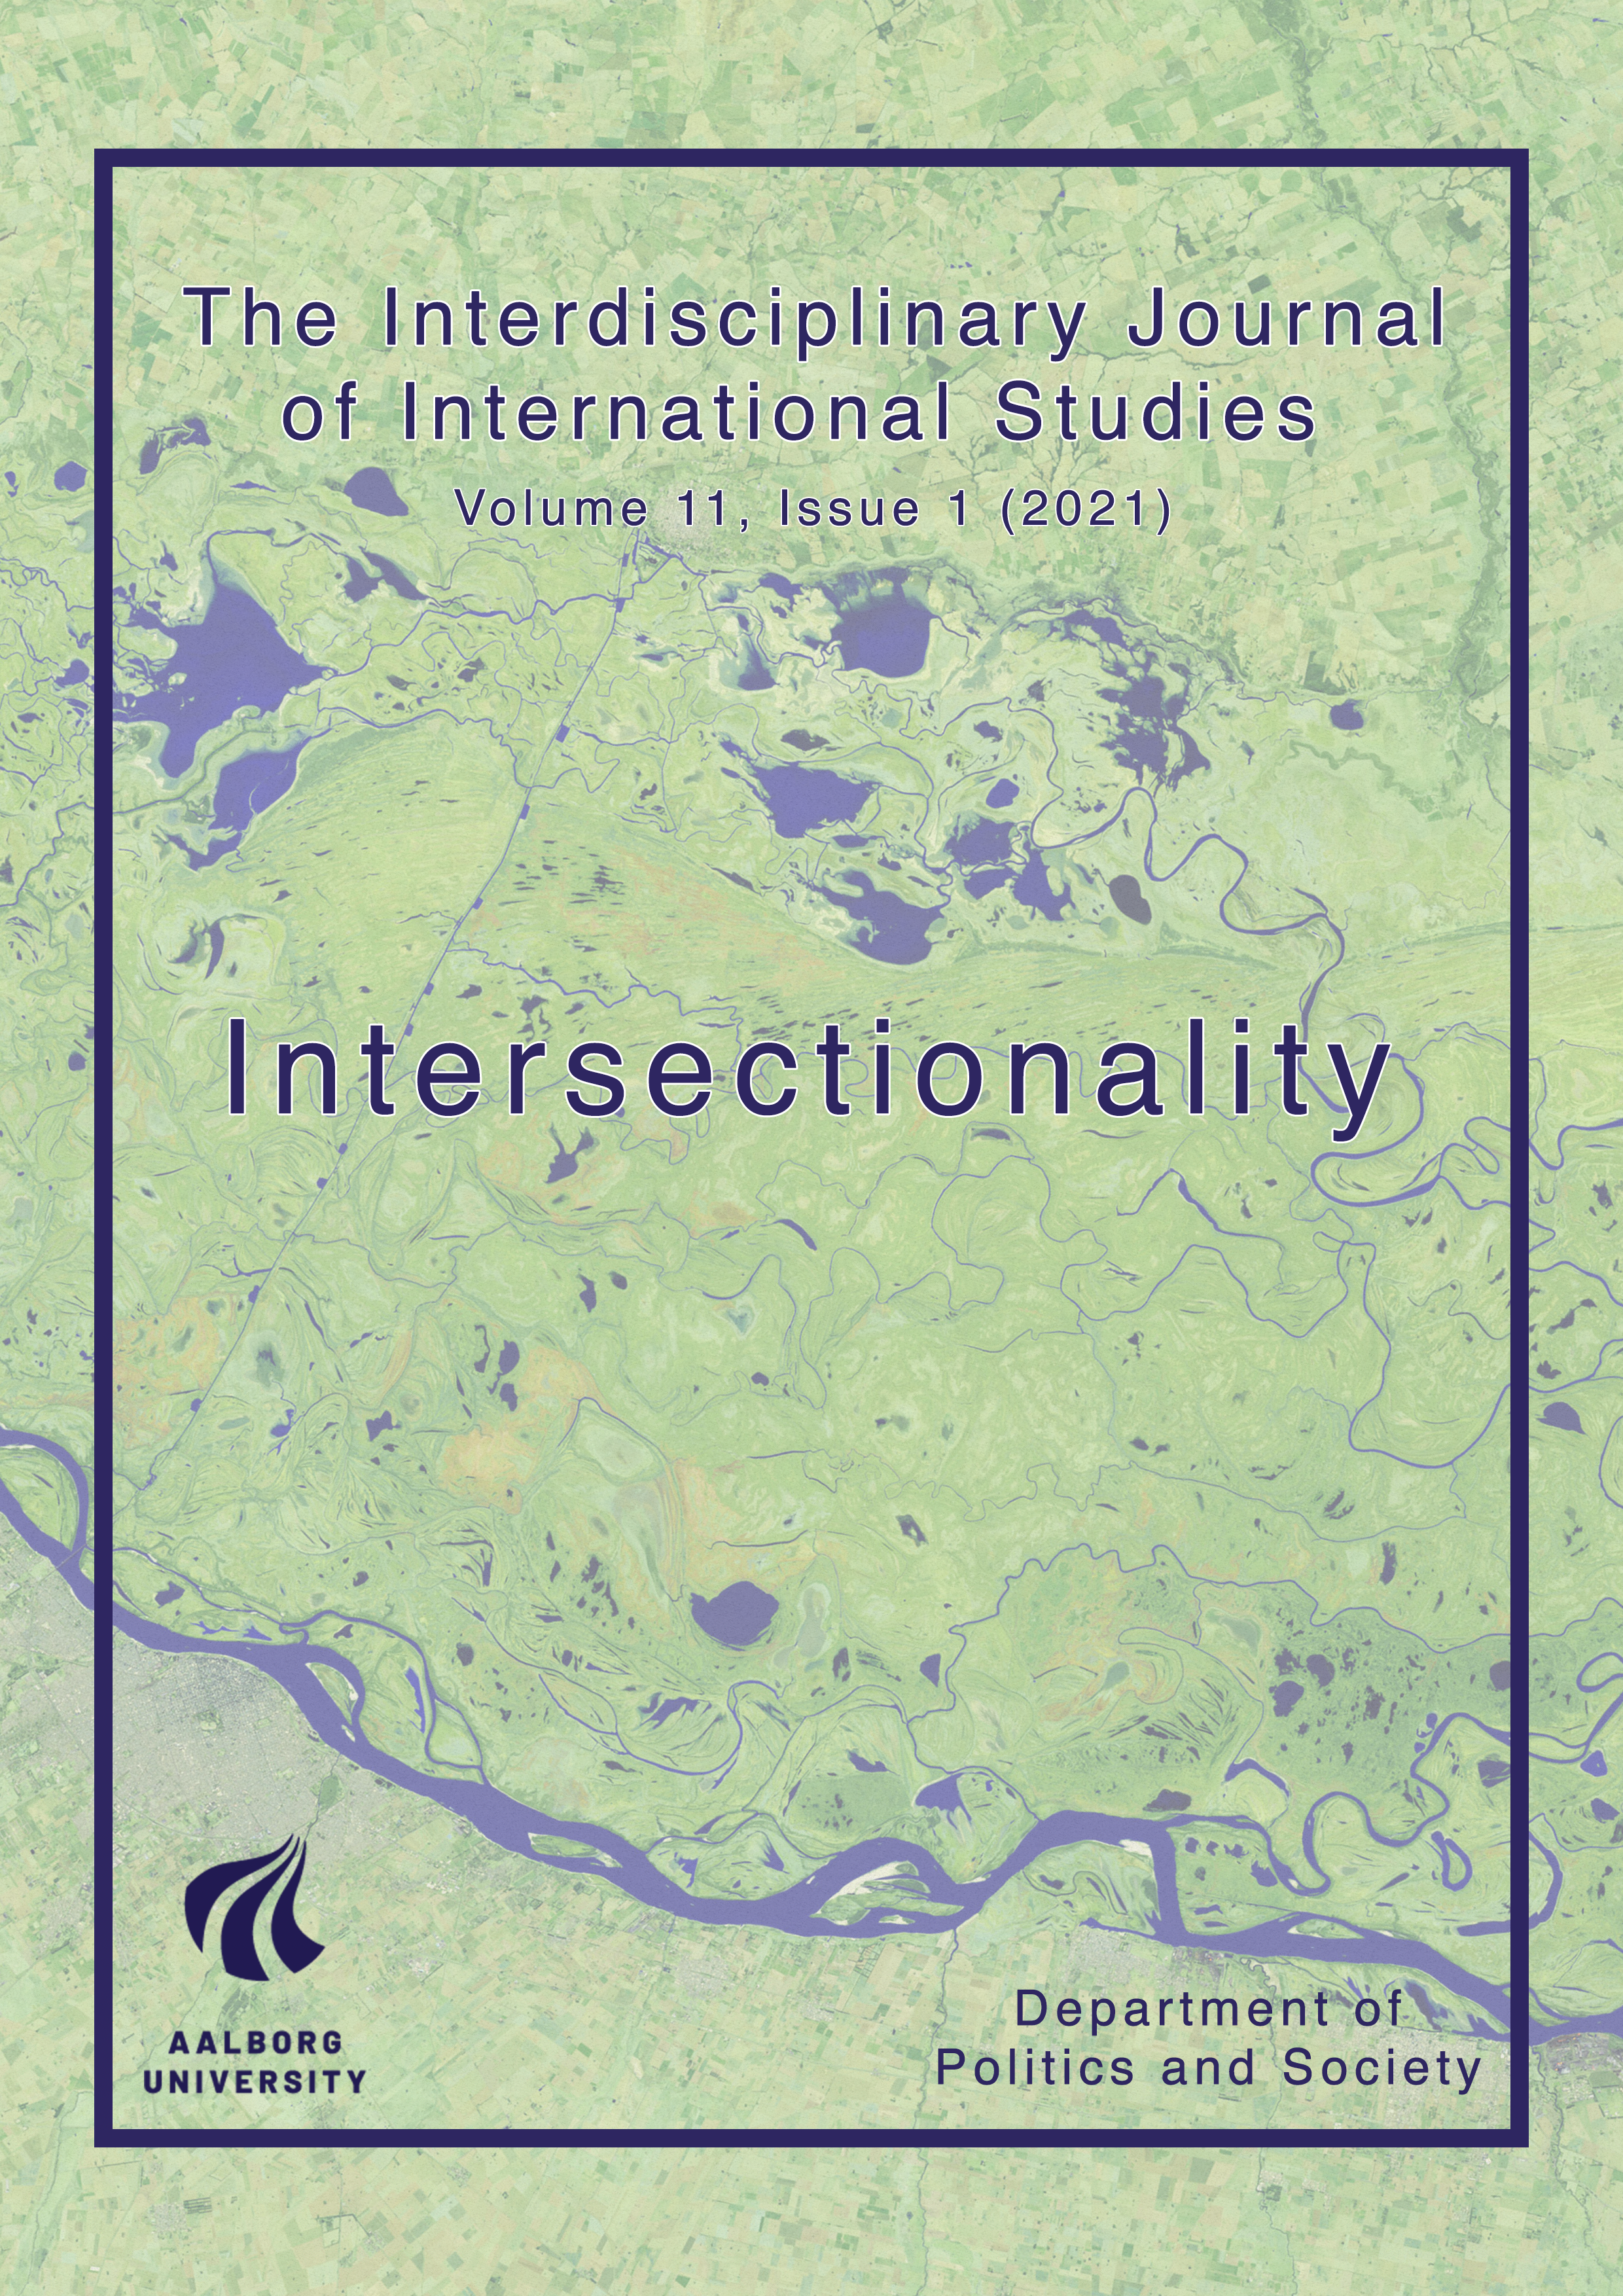 					View Vol. 11 No. 1 (2021): The Interdisciplinary Journal of International Studies: Intersectionality 
				